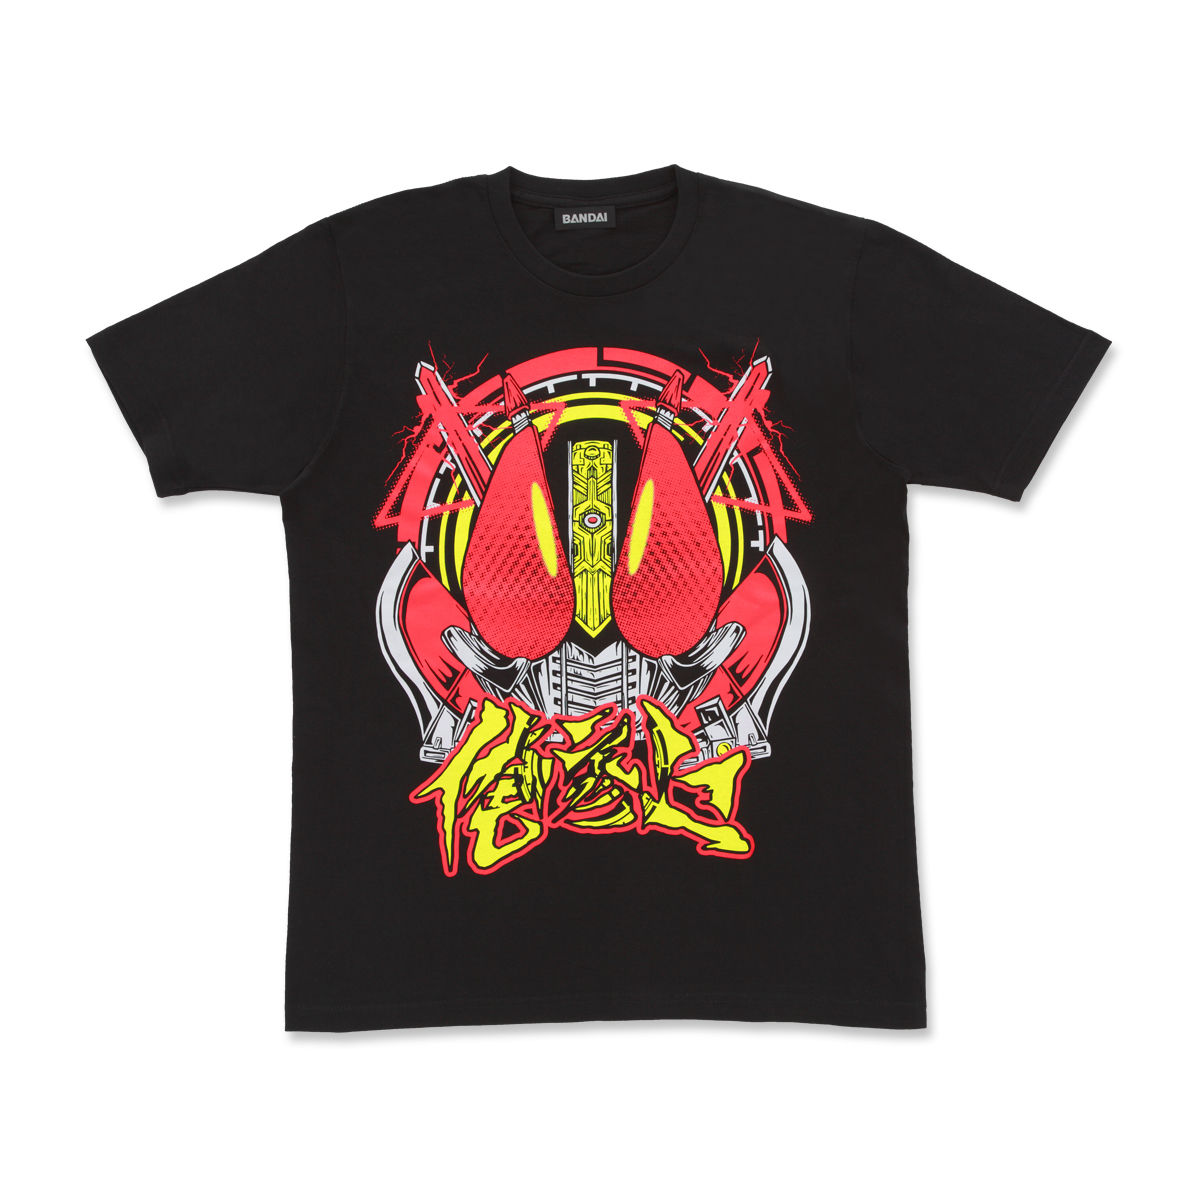 Kamen Rider Den-O feat. STUDIO696 T-shirt